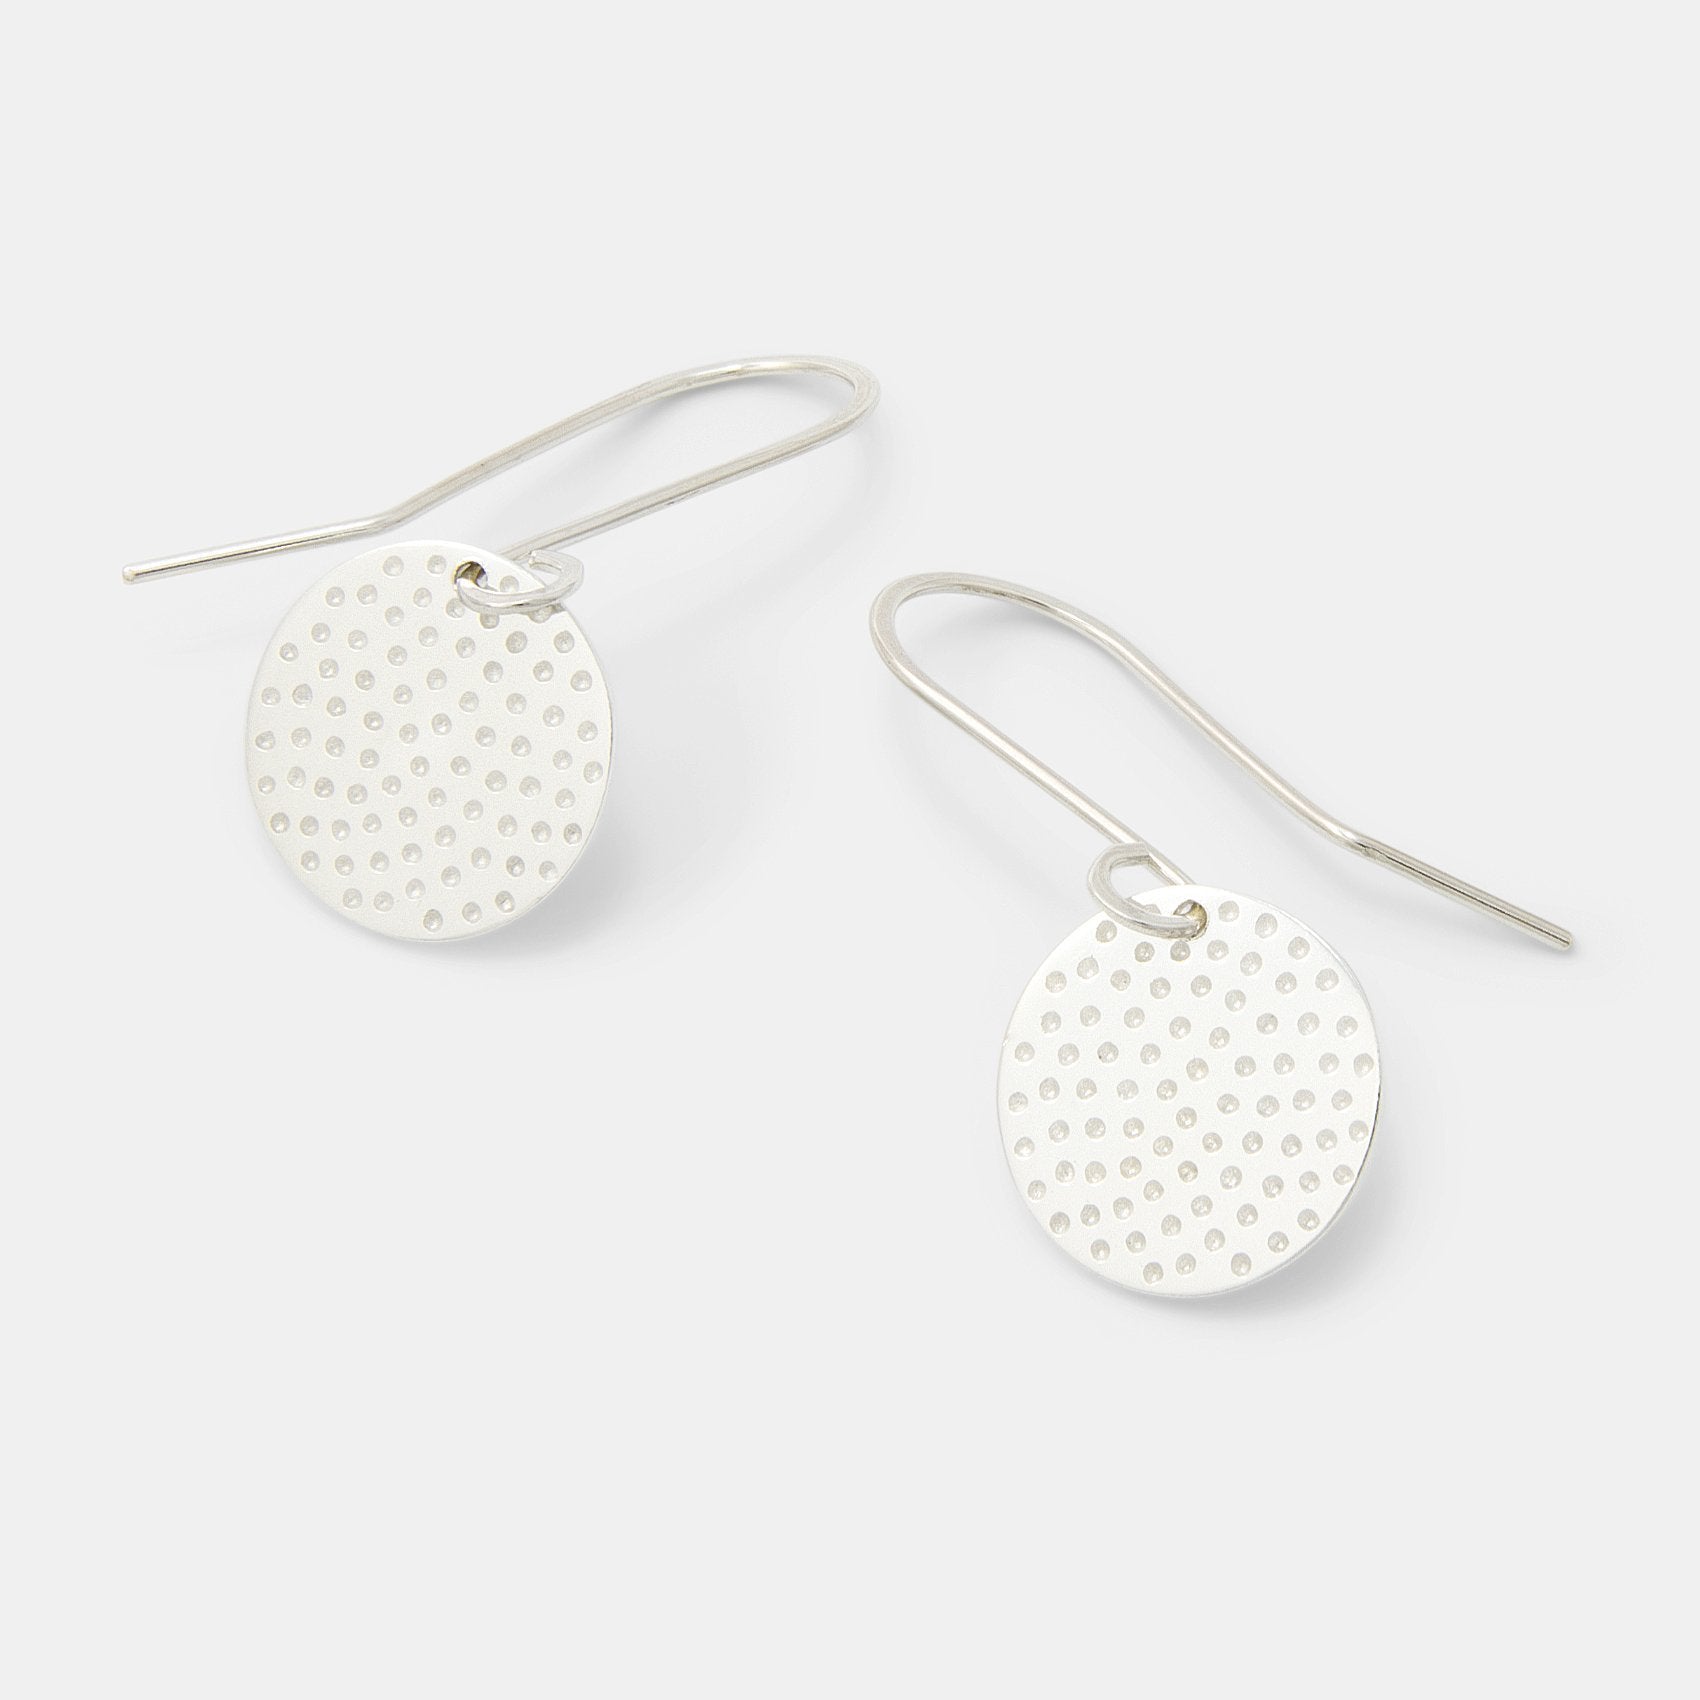 Dots texture silver drop earrings - Simone Walsh Jewellery Australia